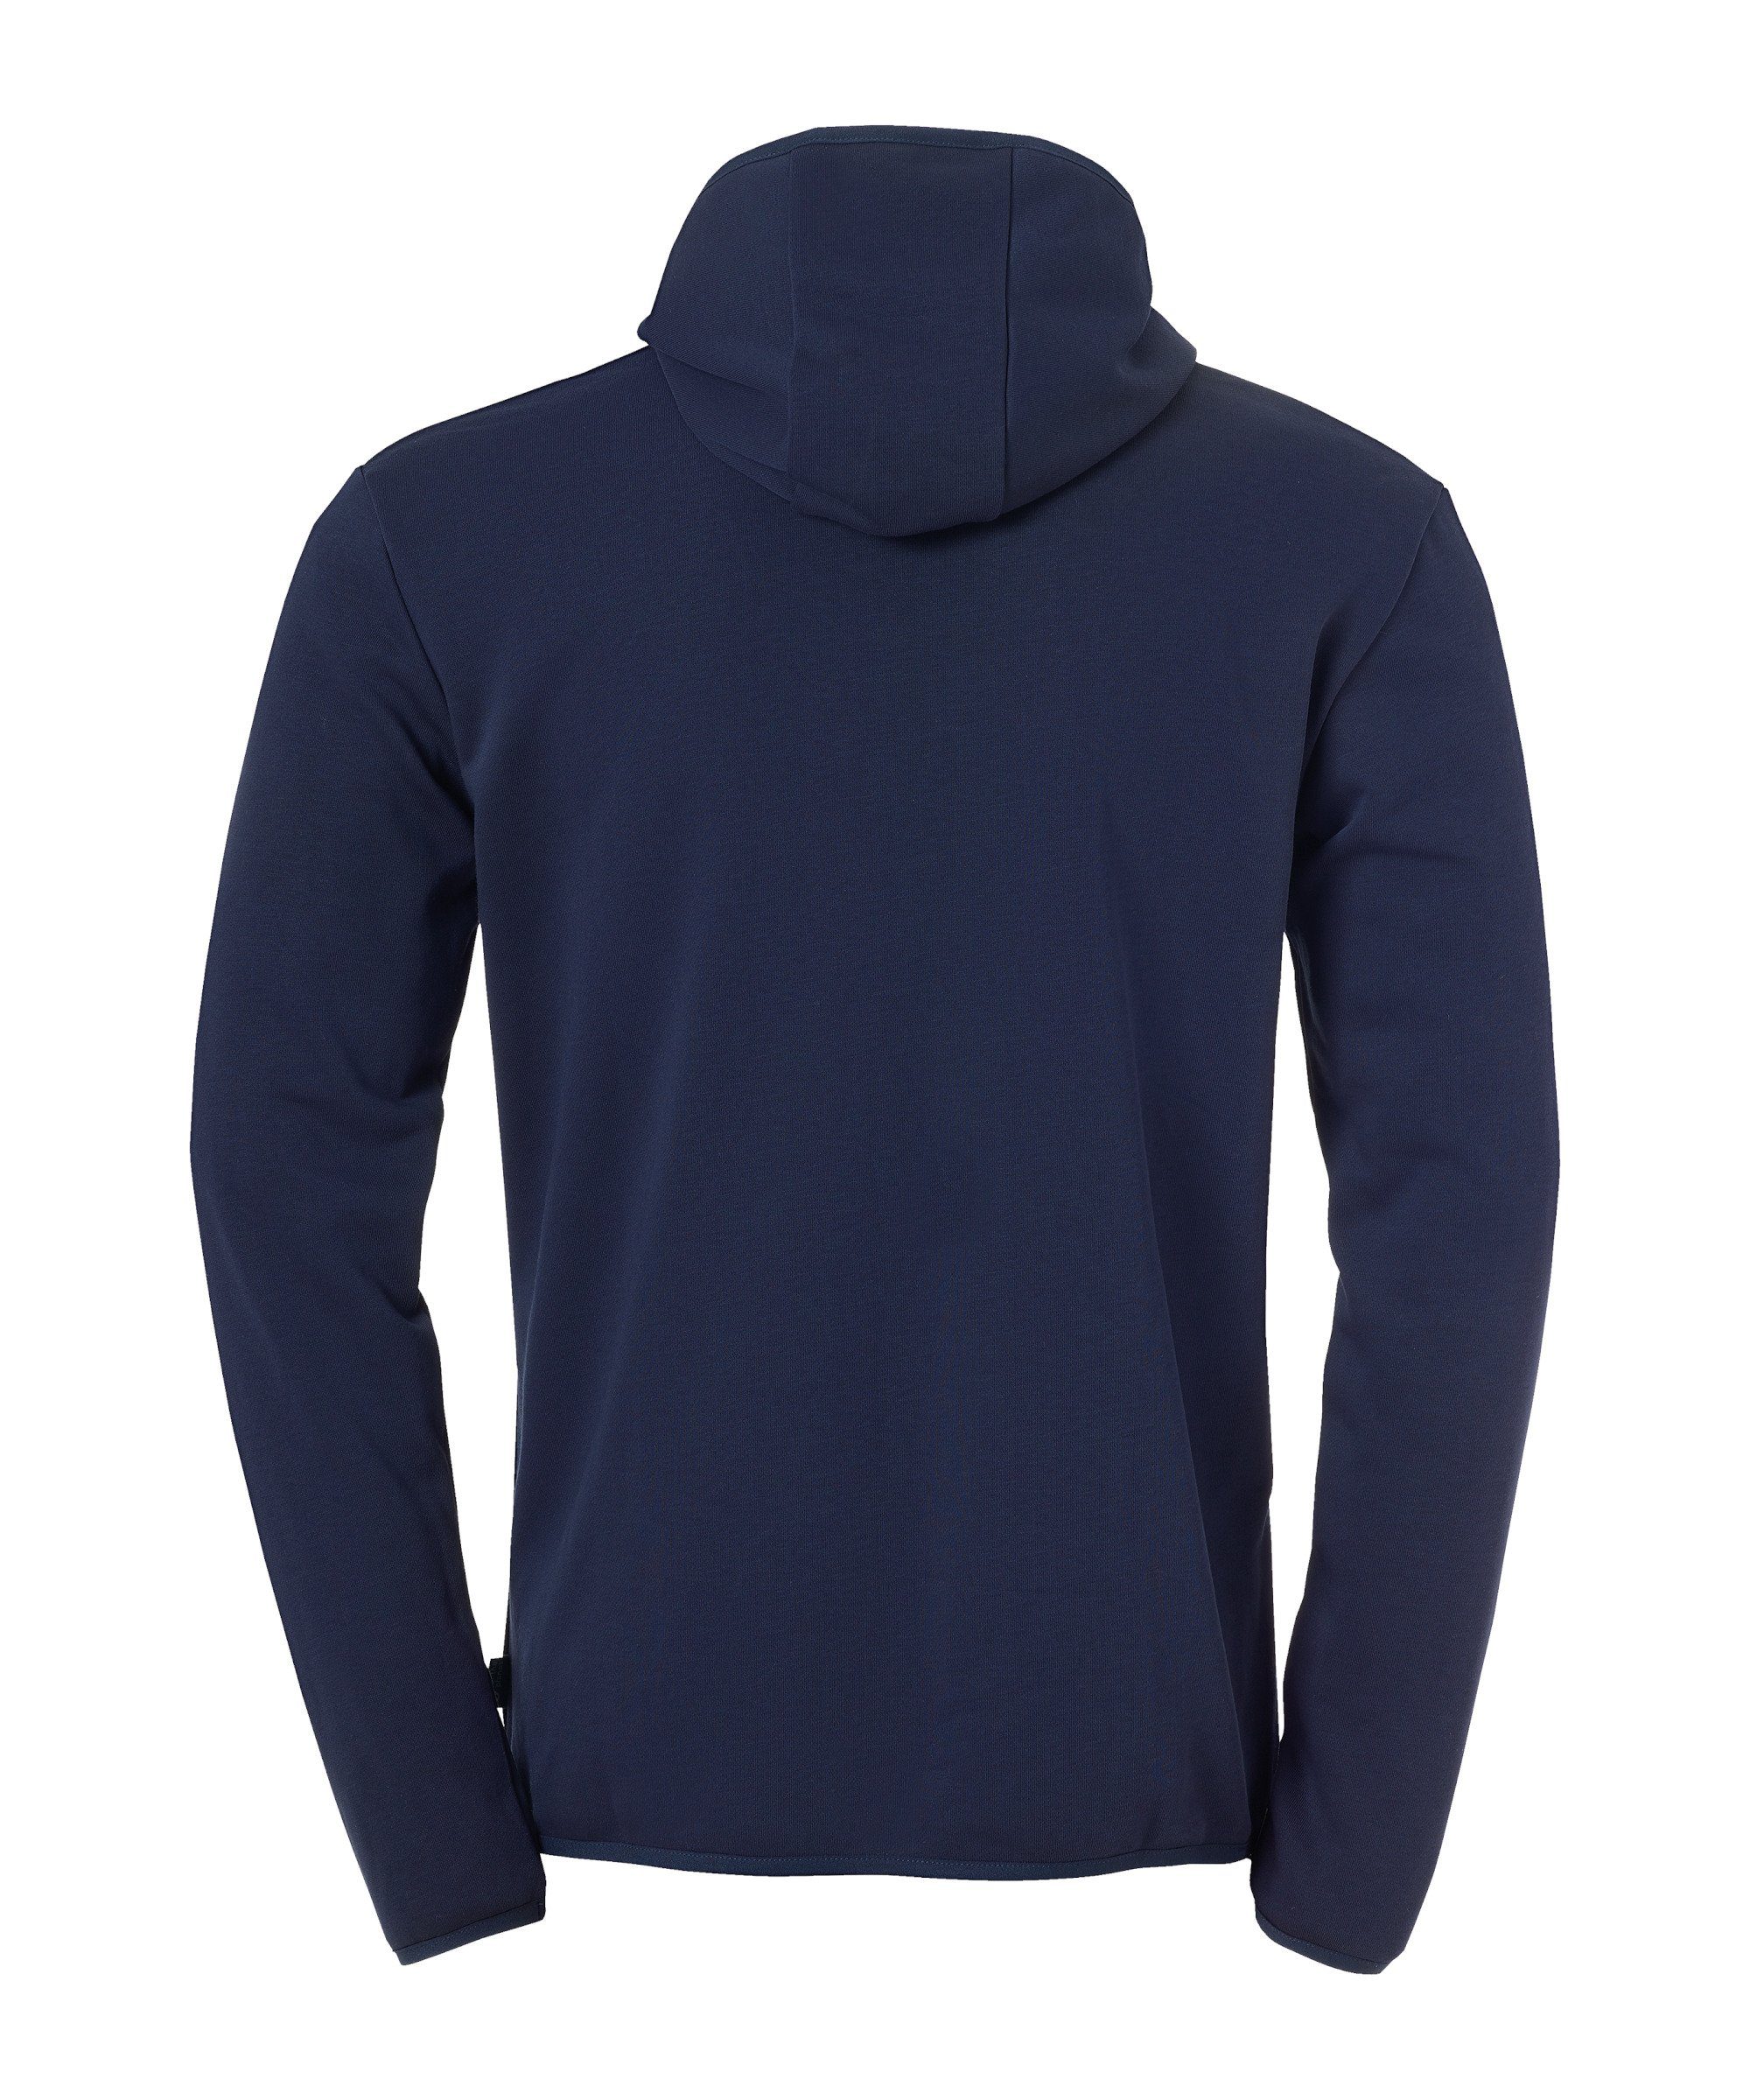 Hoody Sweater Essential uhlsport blau Dunkel